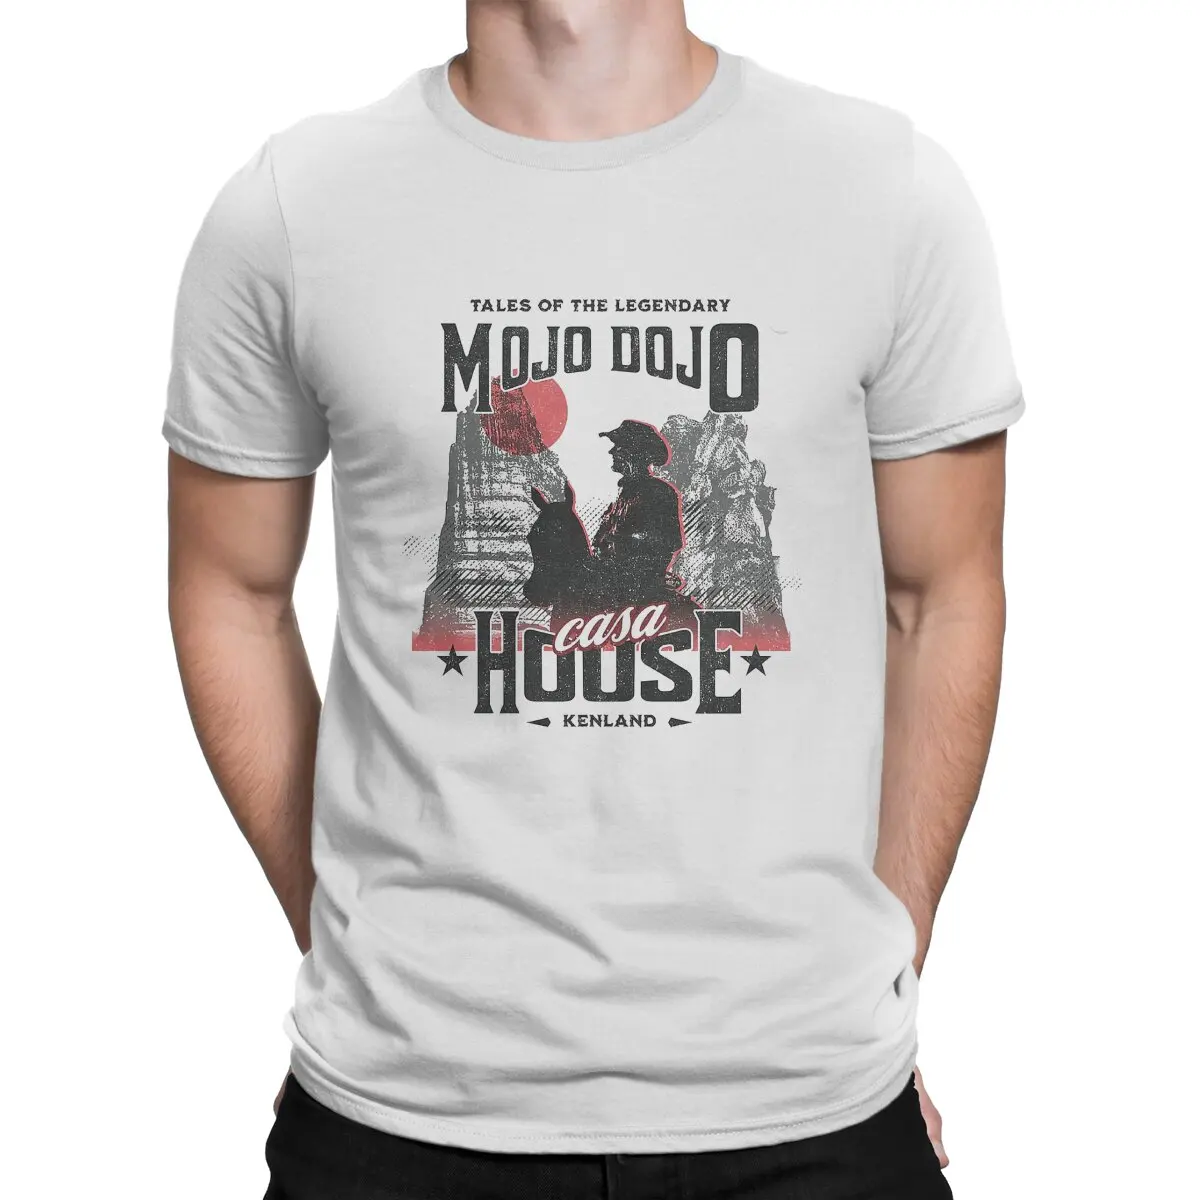 

Men's T-Shirt Kenland Leisure Pure Cotton Tee Shirt Short Sleeve M-Mojo Dojo Casa Houses T Shirts Round Neck Clothes New Arrival